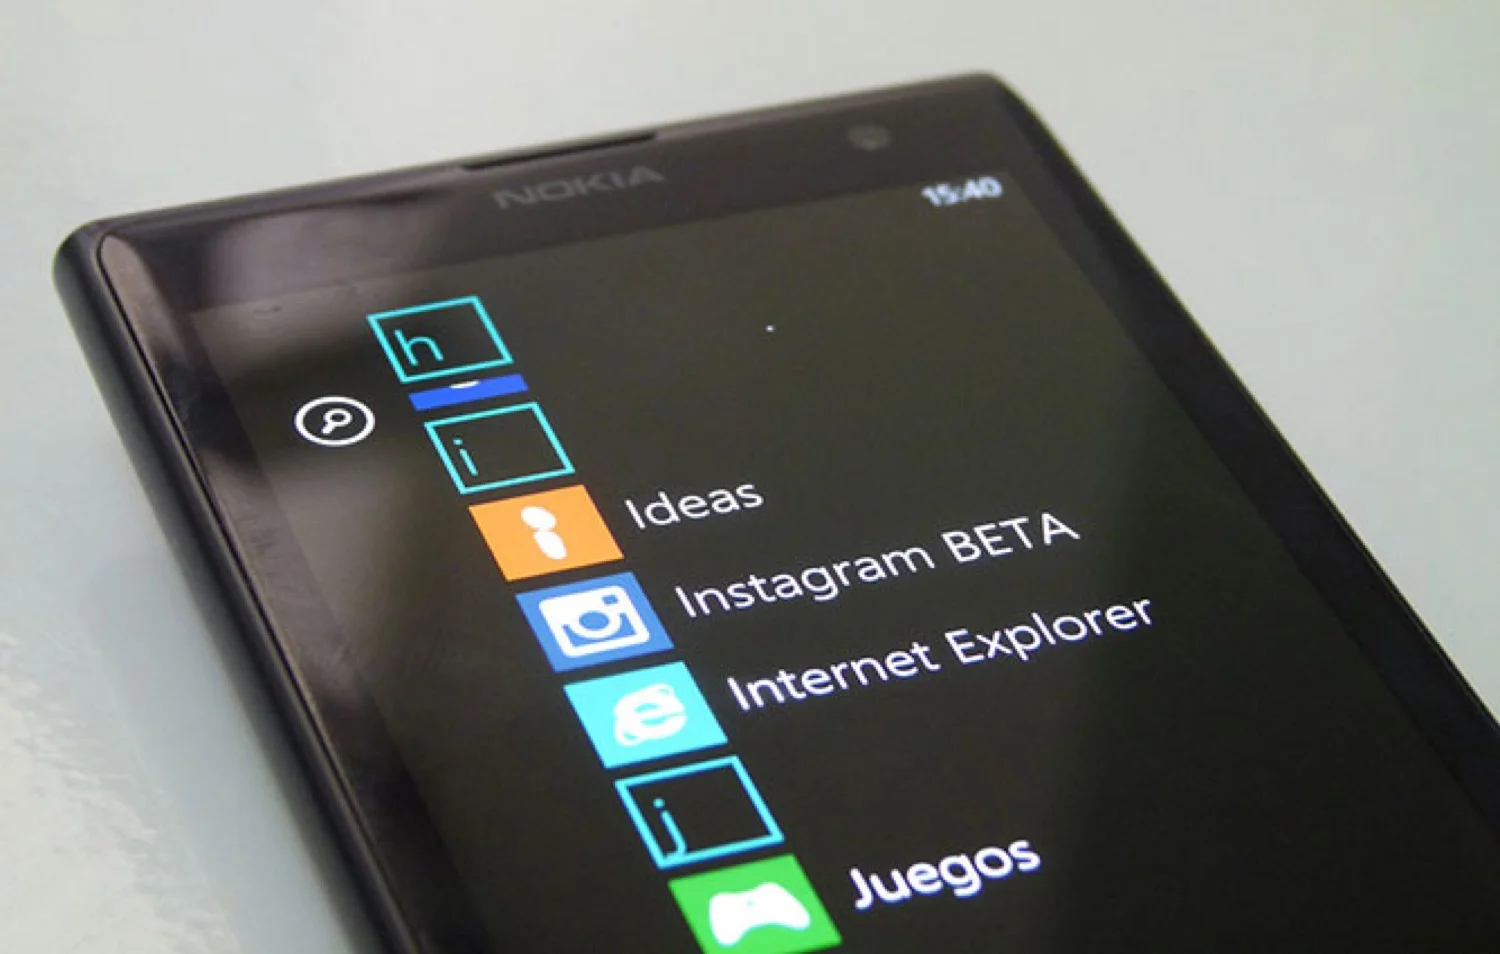 Review del smartphone Nokia Lumia 1020